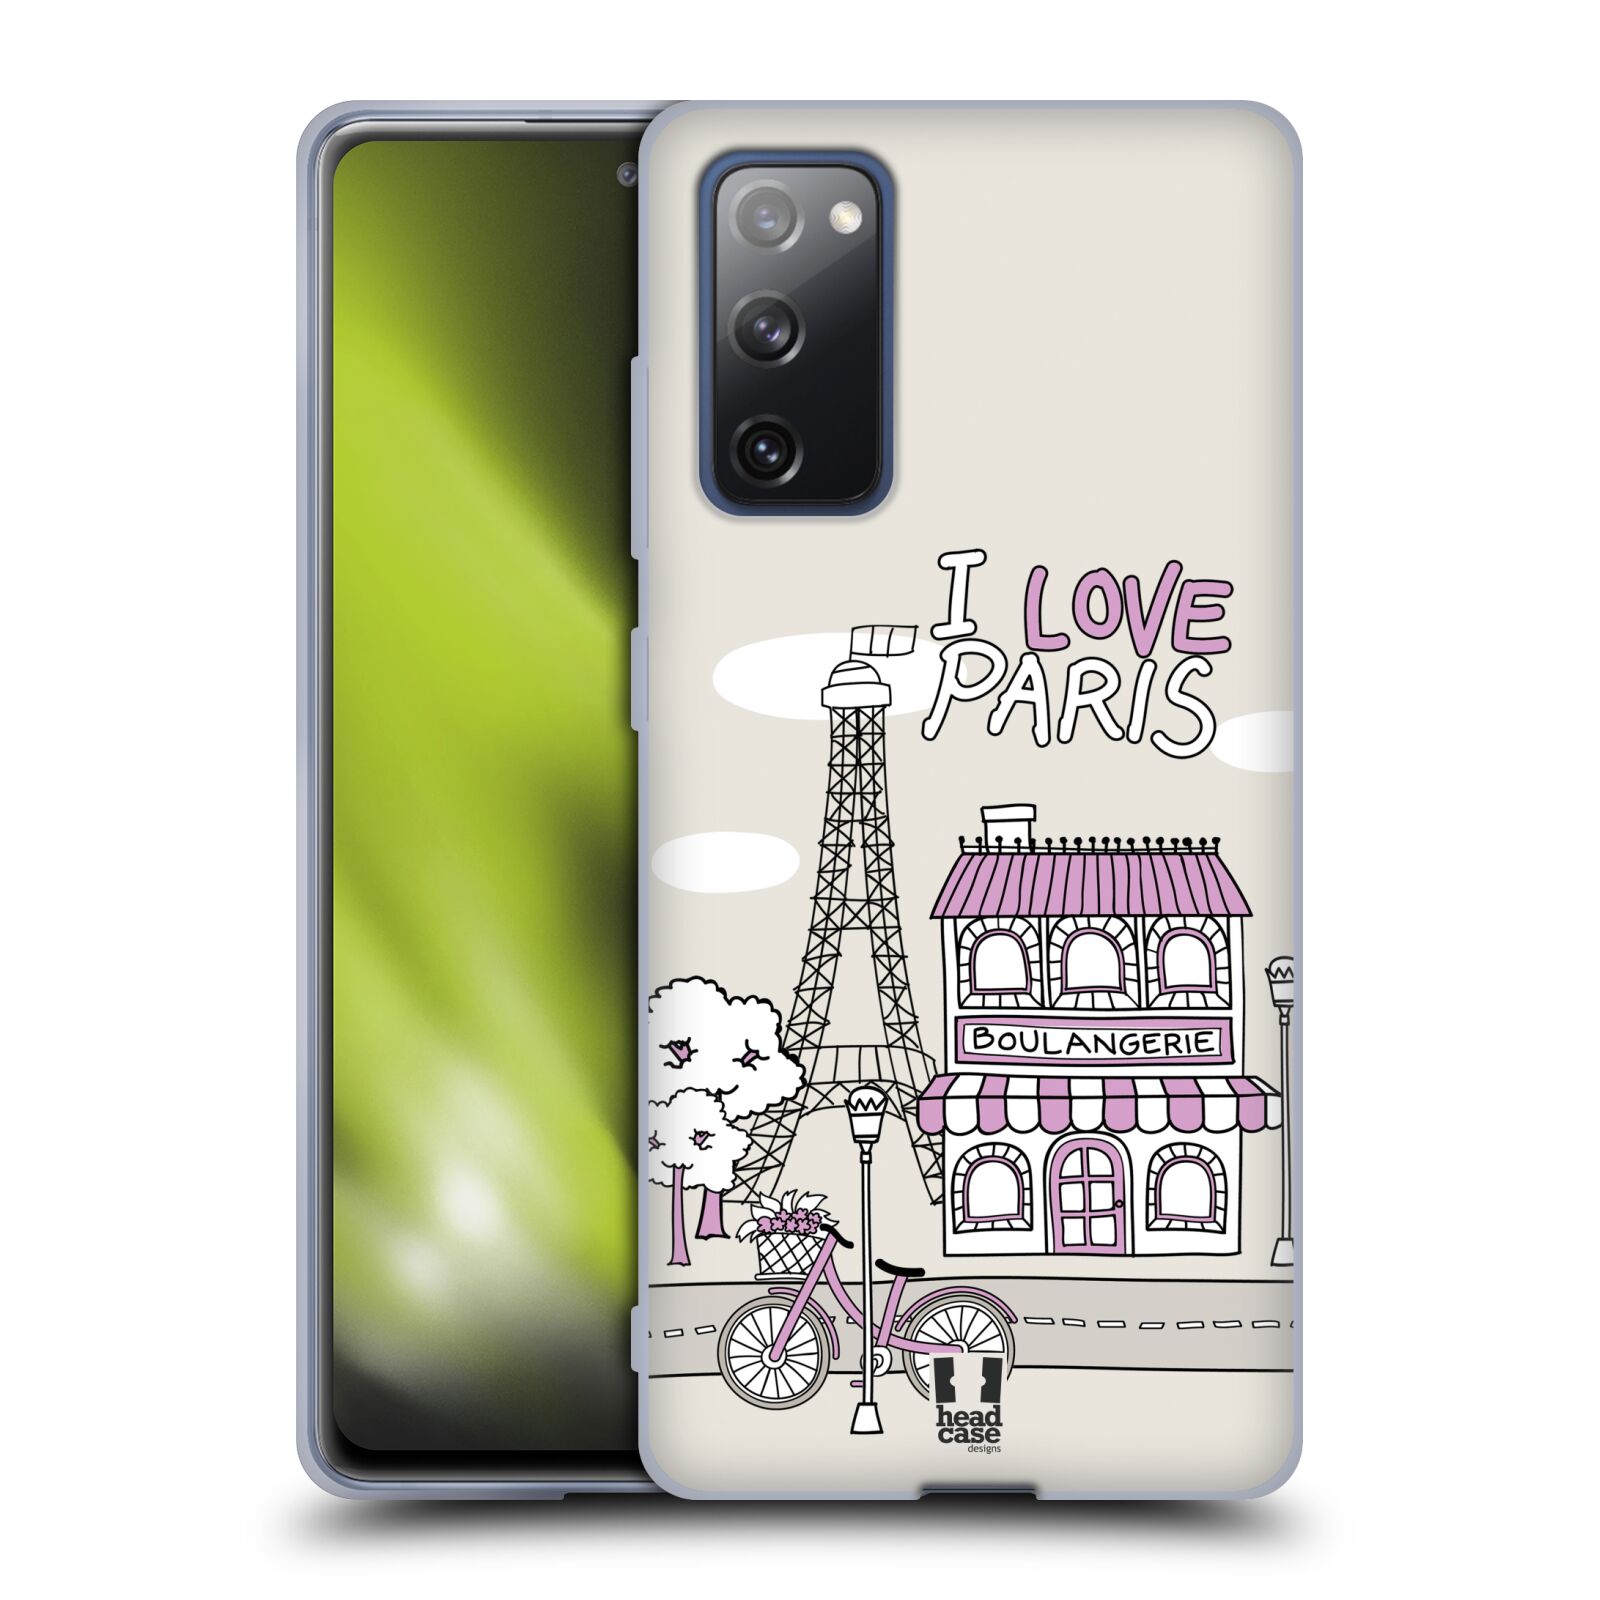 Plastový obal HEAD CASE na mobil Samsung Galaxy S20 FE / S20 FE 5G vzor Kreslená městečka FIALOVÁ, Paříž, Francie, I LOVE PARIS